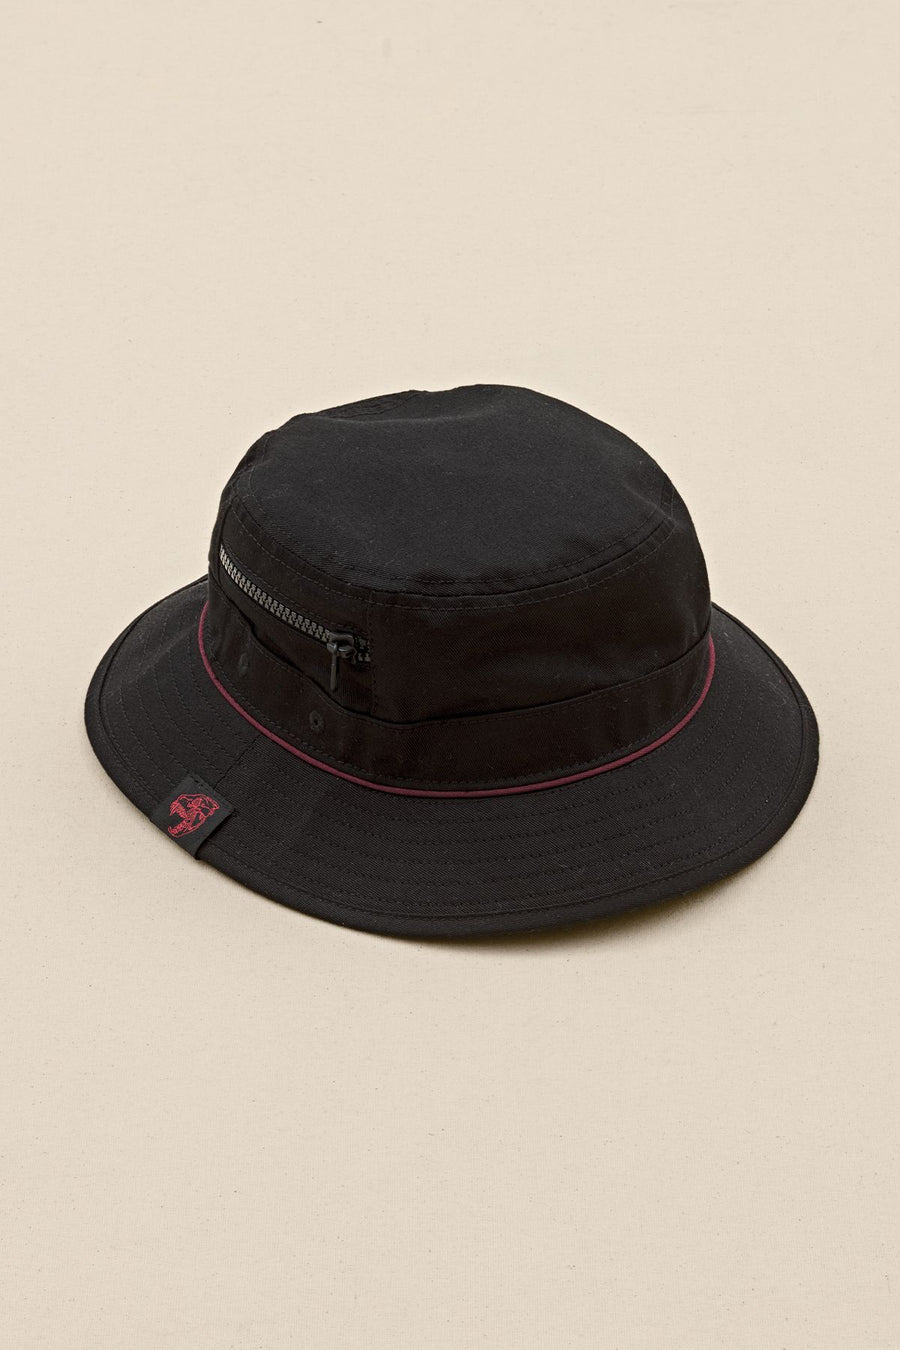 Globe Dion Agius Dark Hollow Bucket Hat - [ka(:)rısma] showroom & concept store